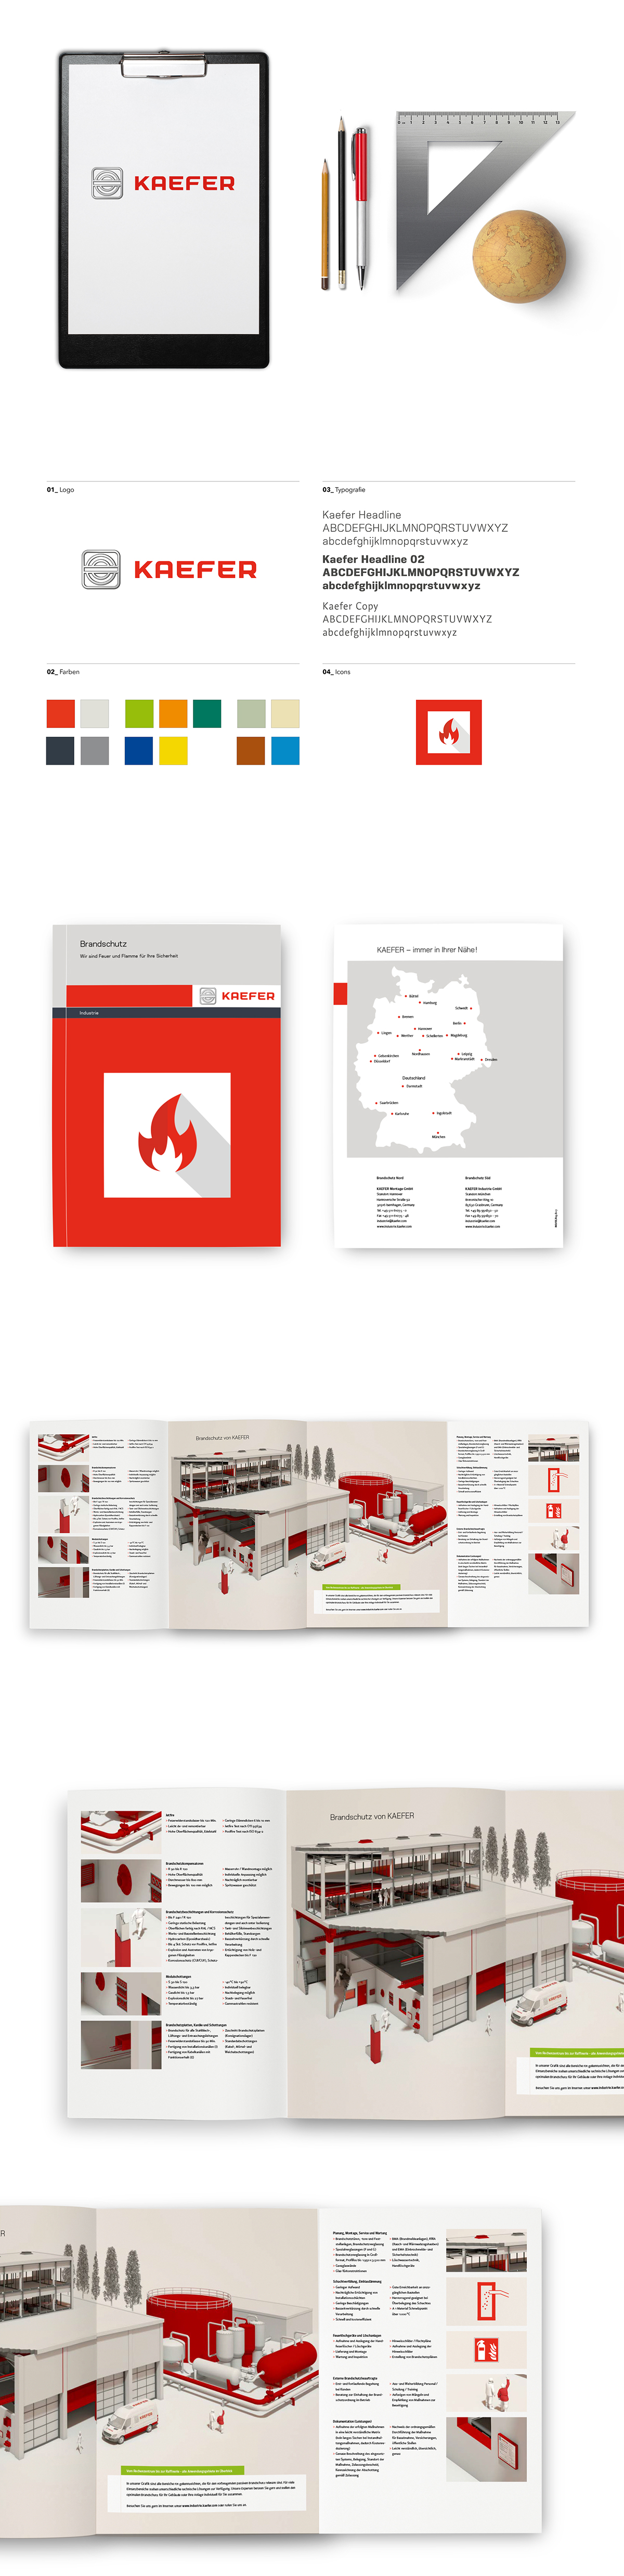 Brandschutz industrie kaefer KAEFER INDUSTRIE broschure printdesign